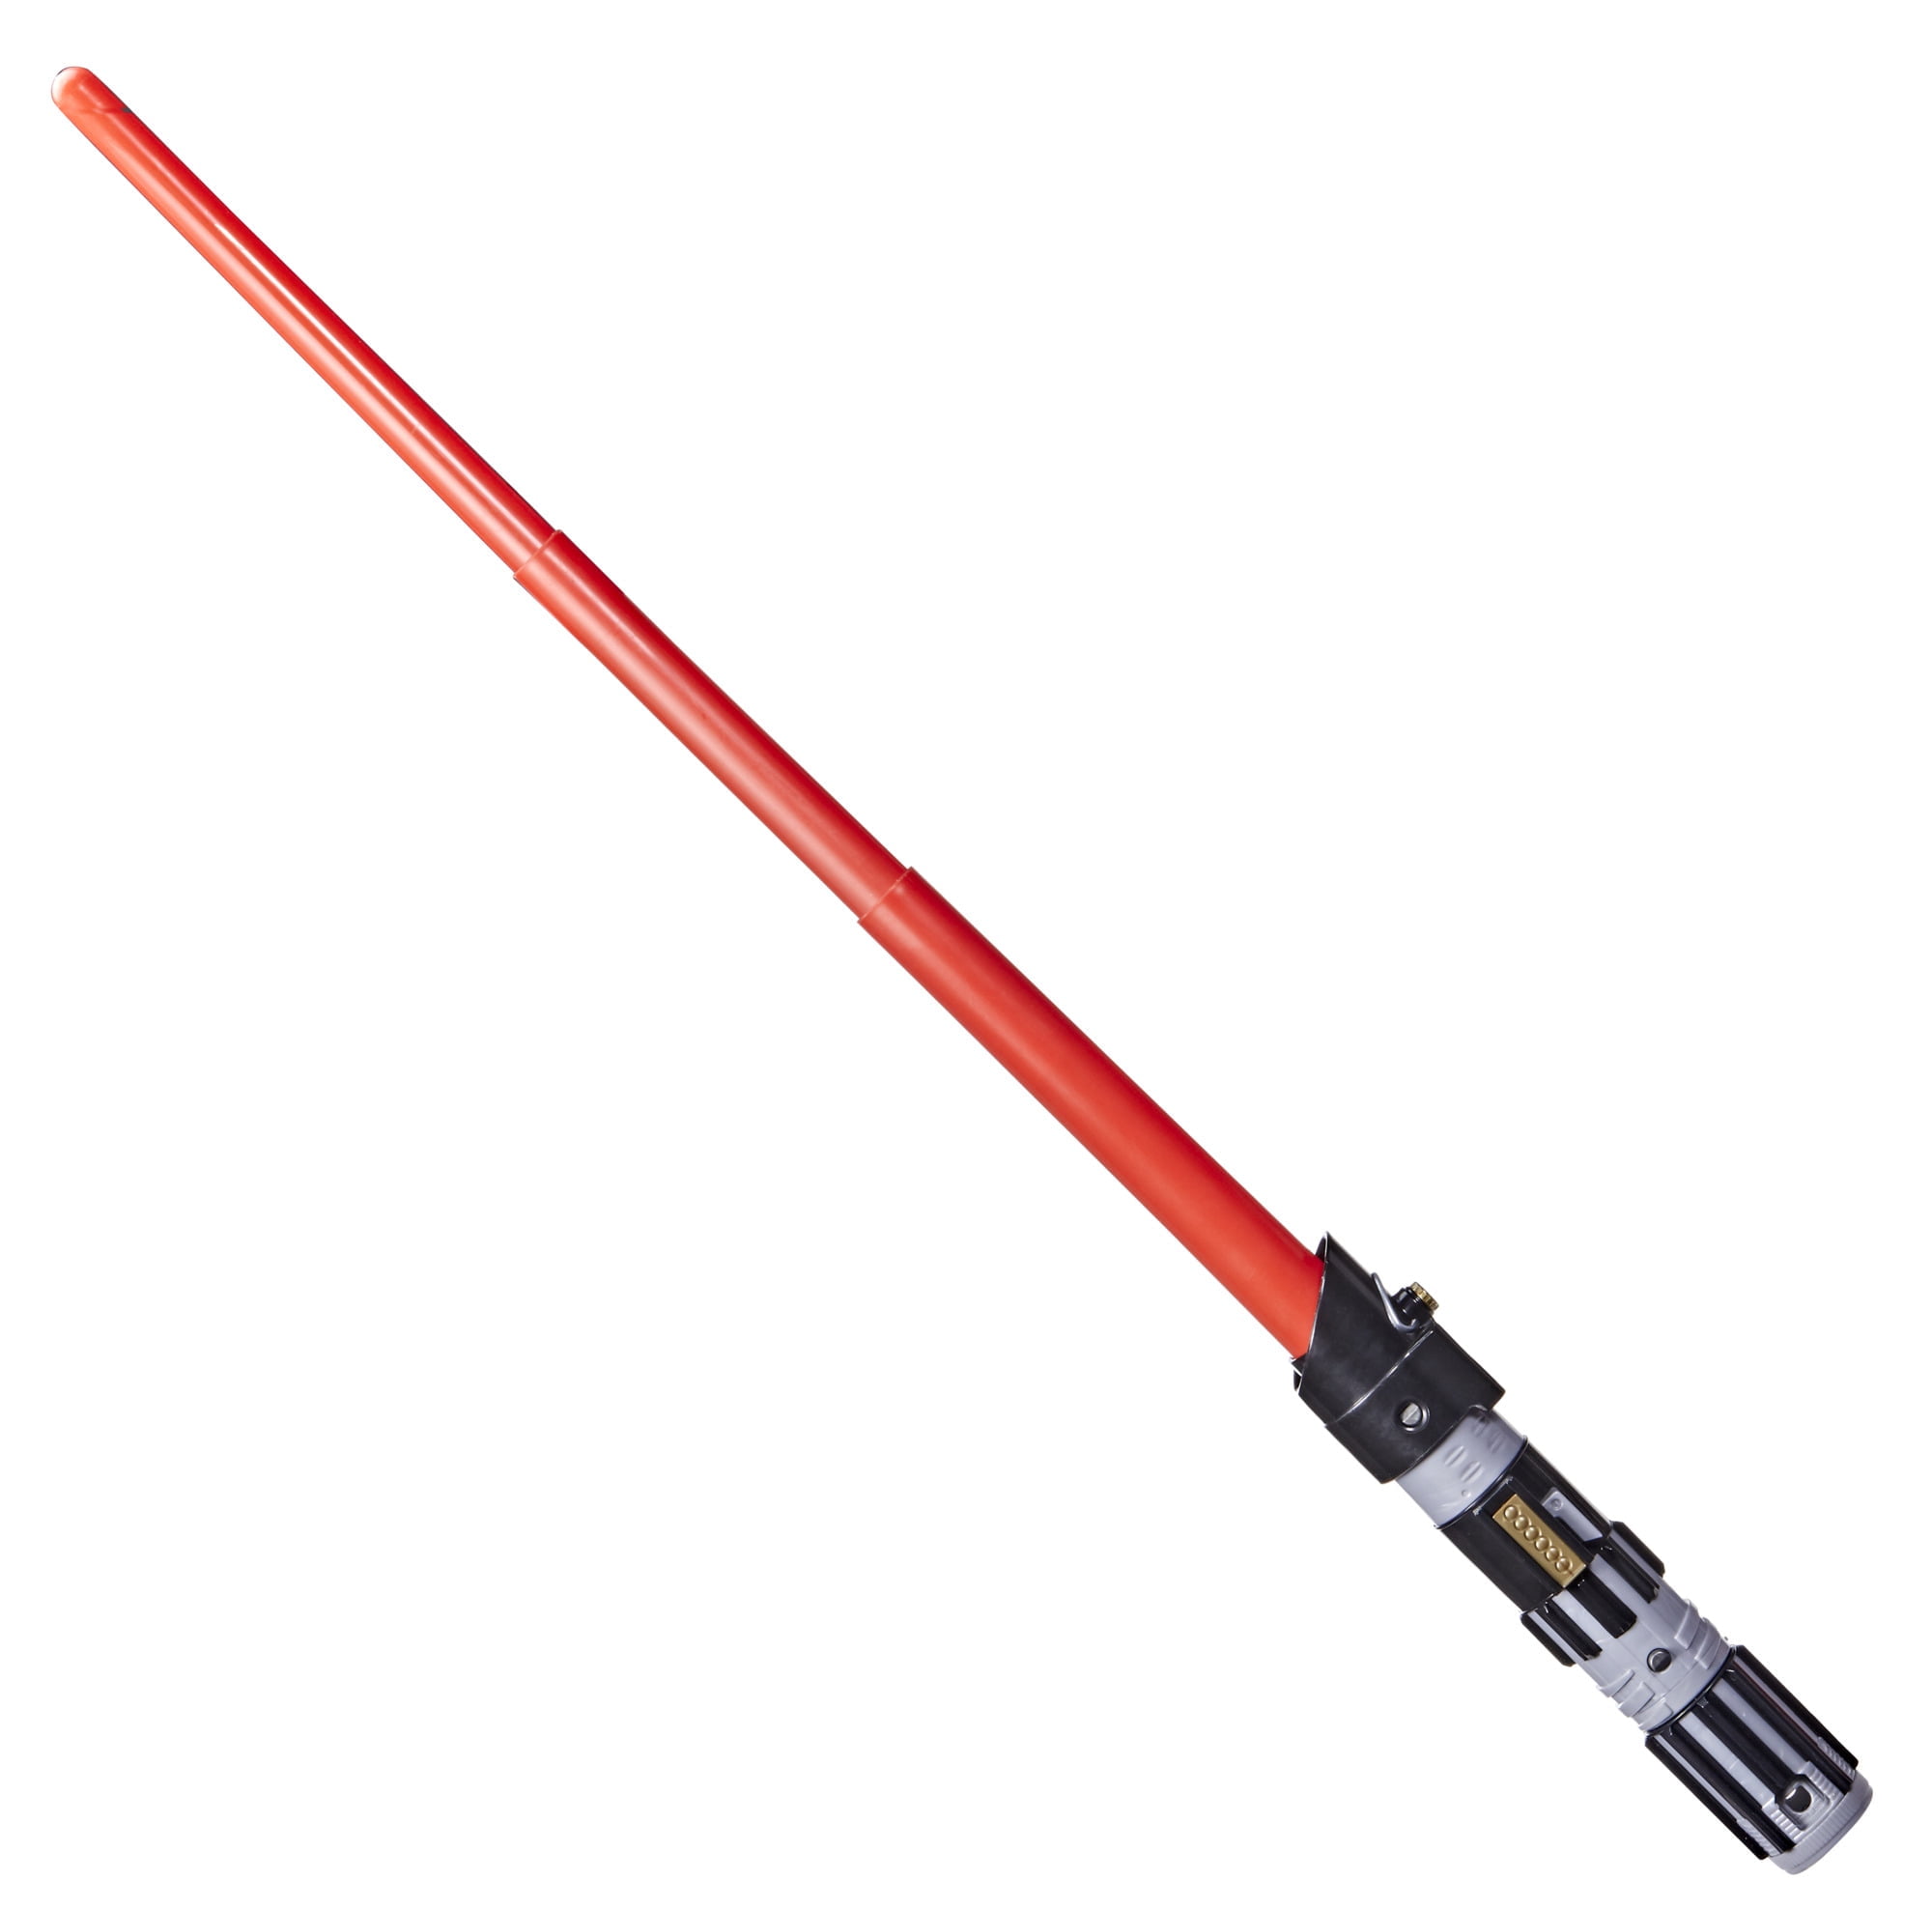 Star Wars: Lightsaber Forge Darth Vader Extendable Red Lightsaber Roleplay Toy